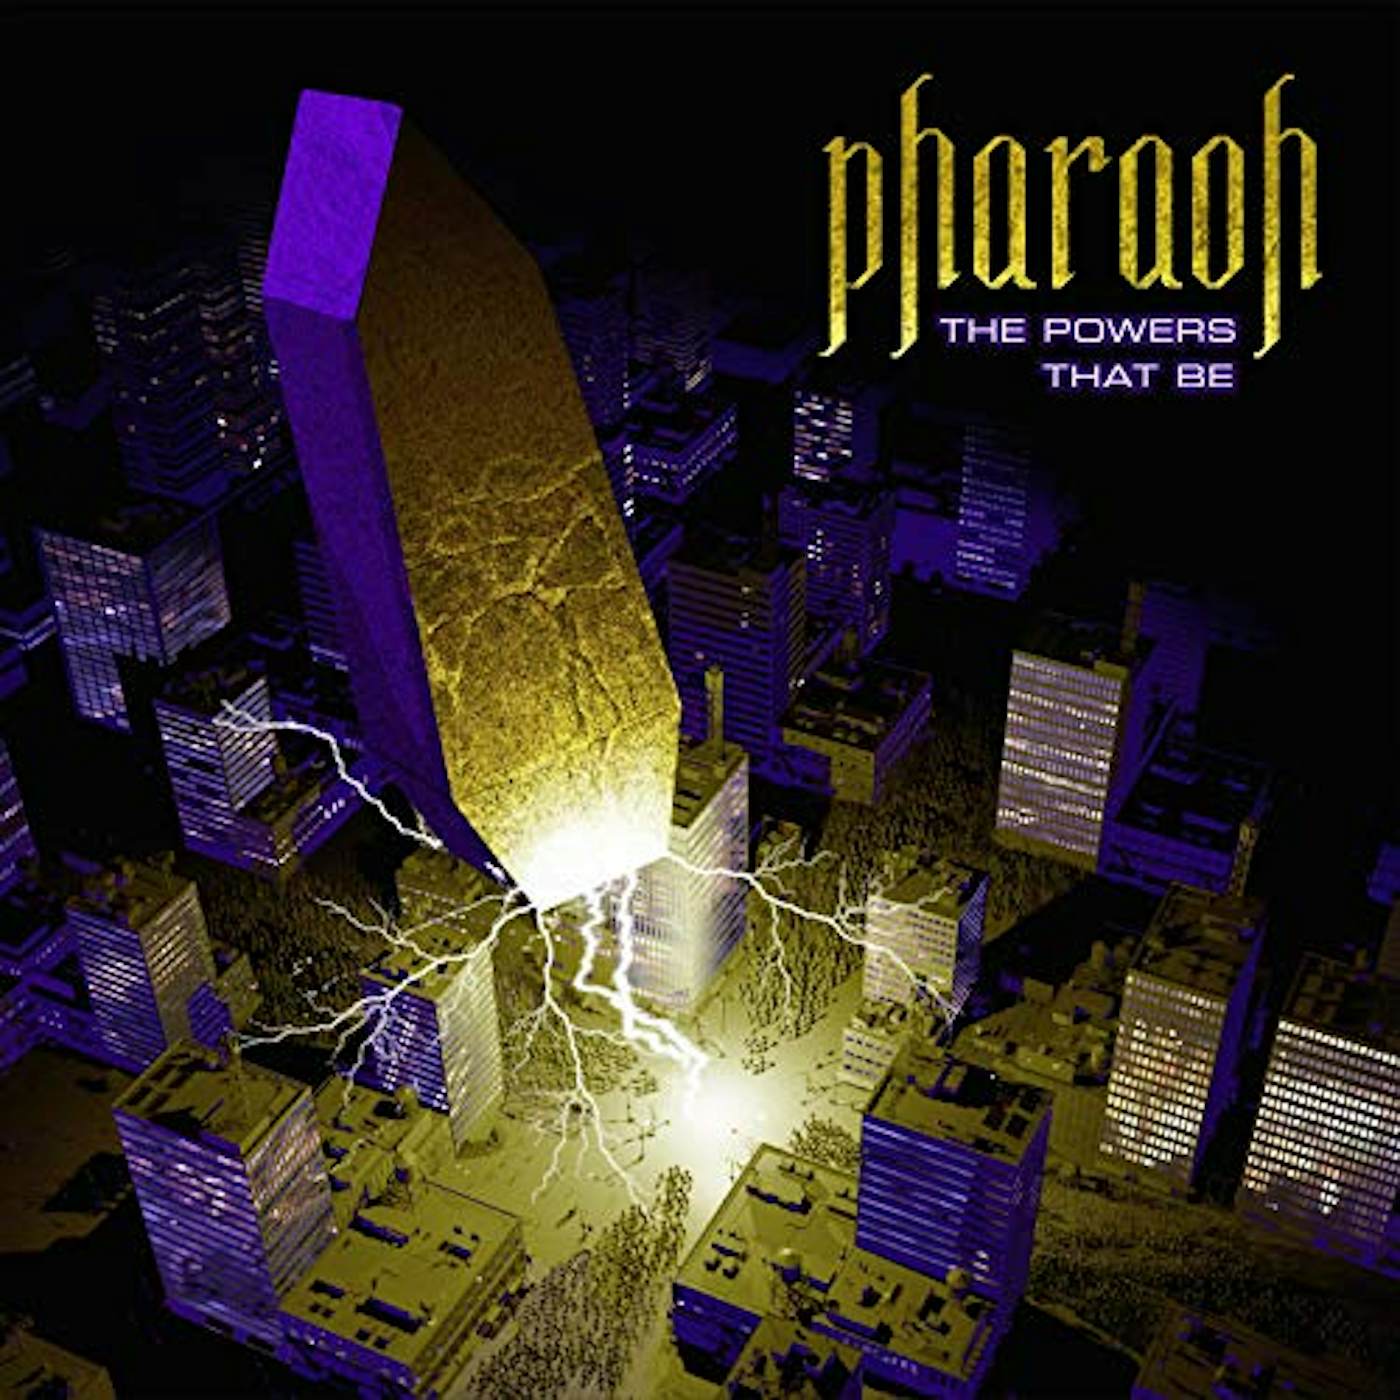 Pharaoh POWERS THAT BE Vinyl Record